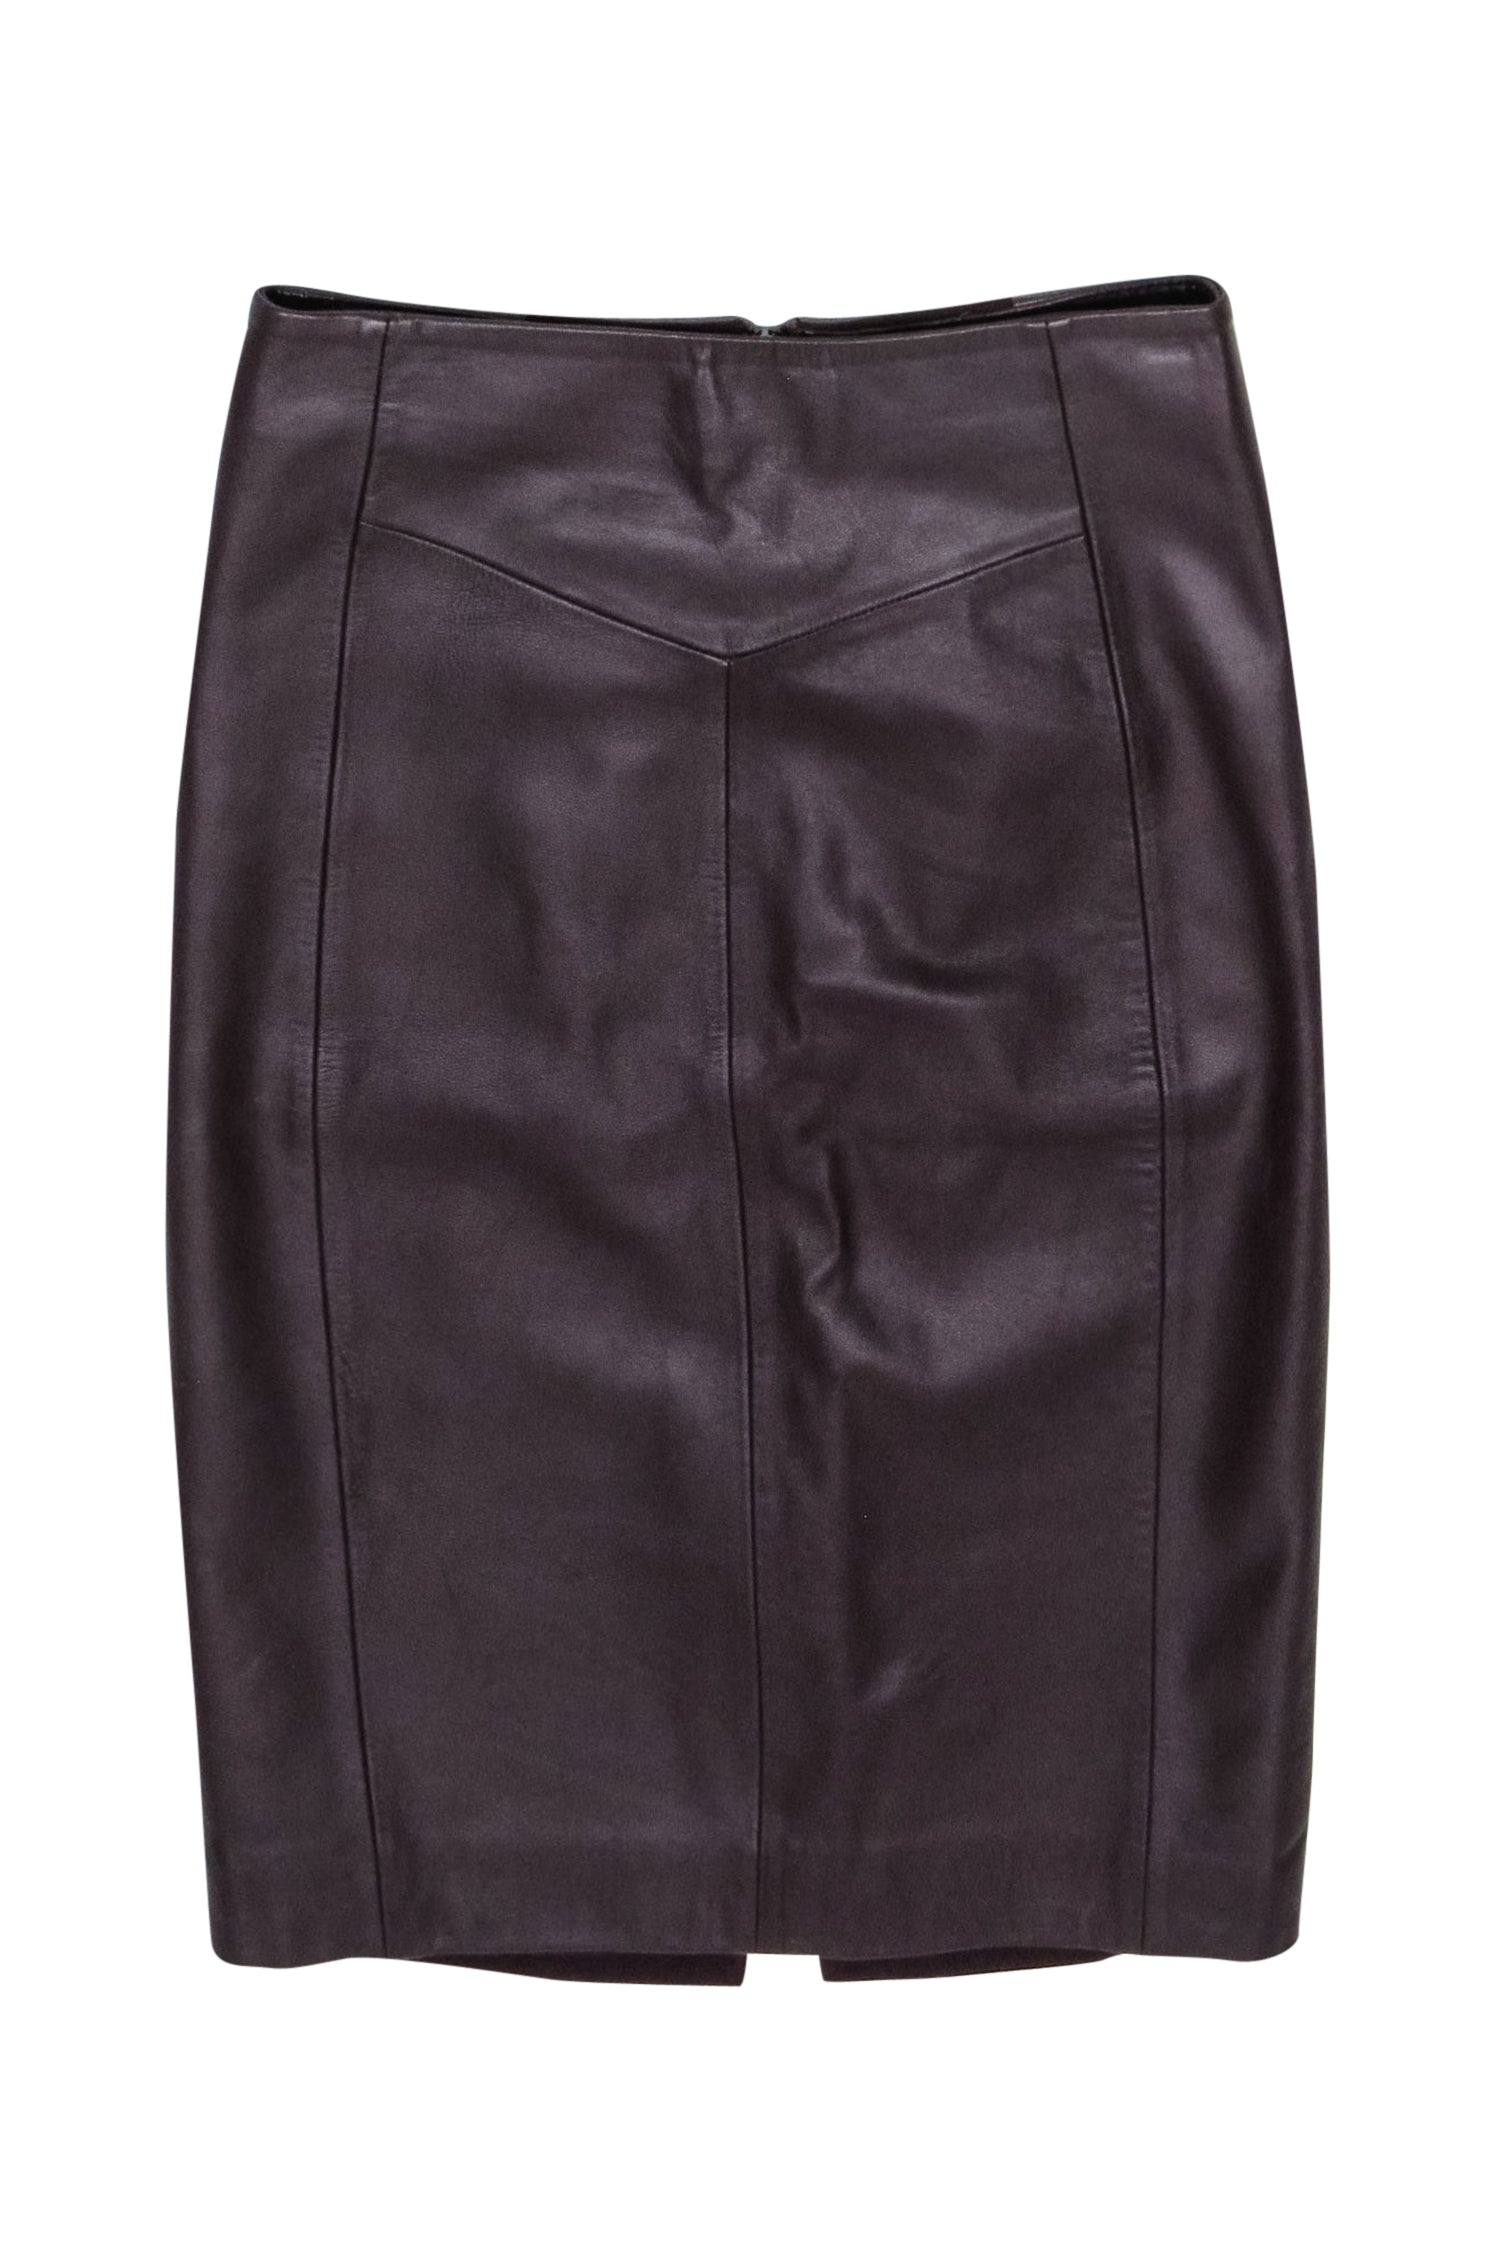 Reiss - Berry Leather Paneled Pencil Skirt Sz 4